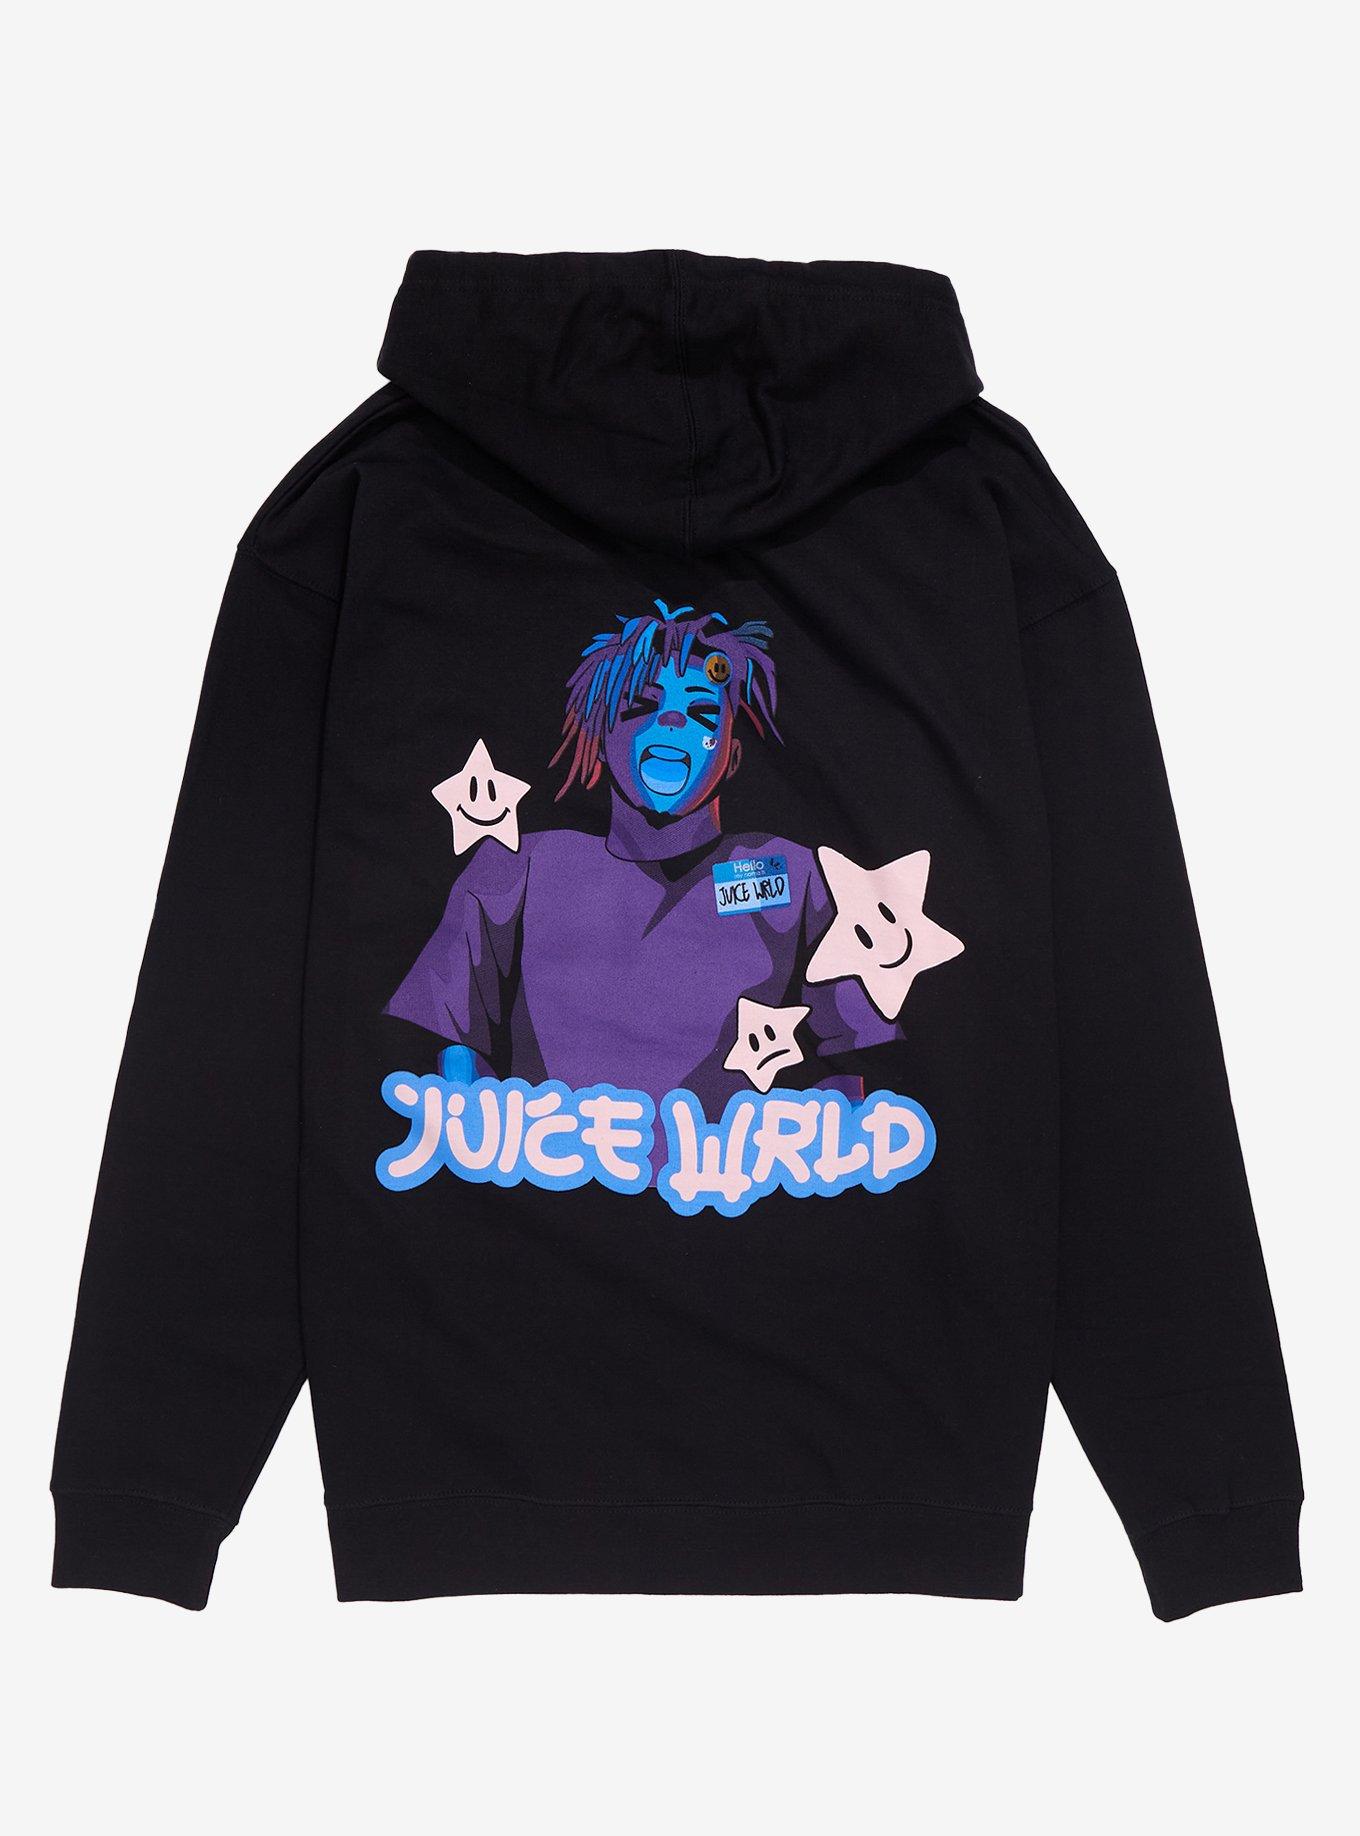 Juice Wrld Outfits - Jackets, Vests, Hoodies